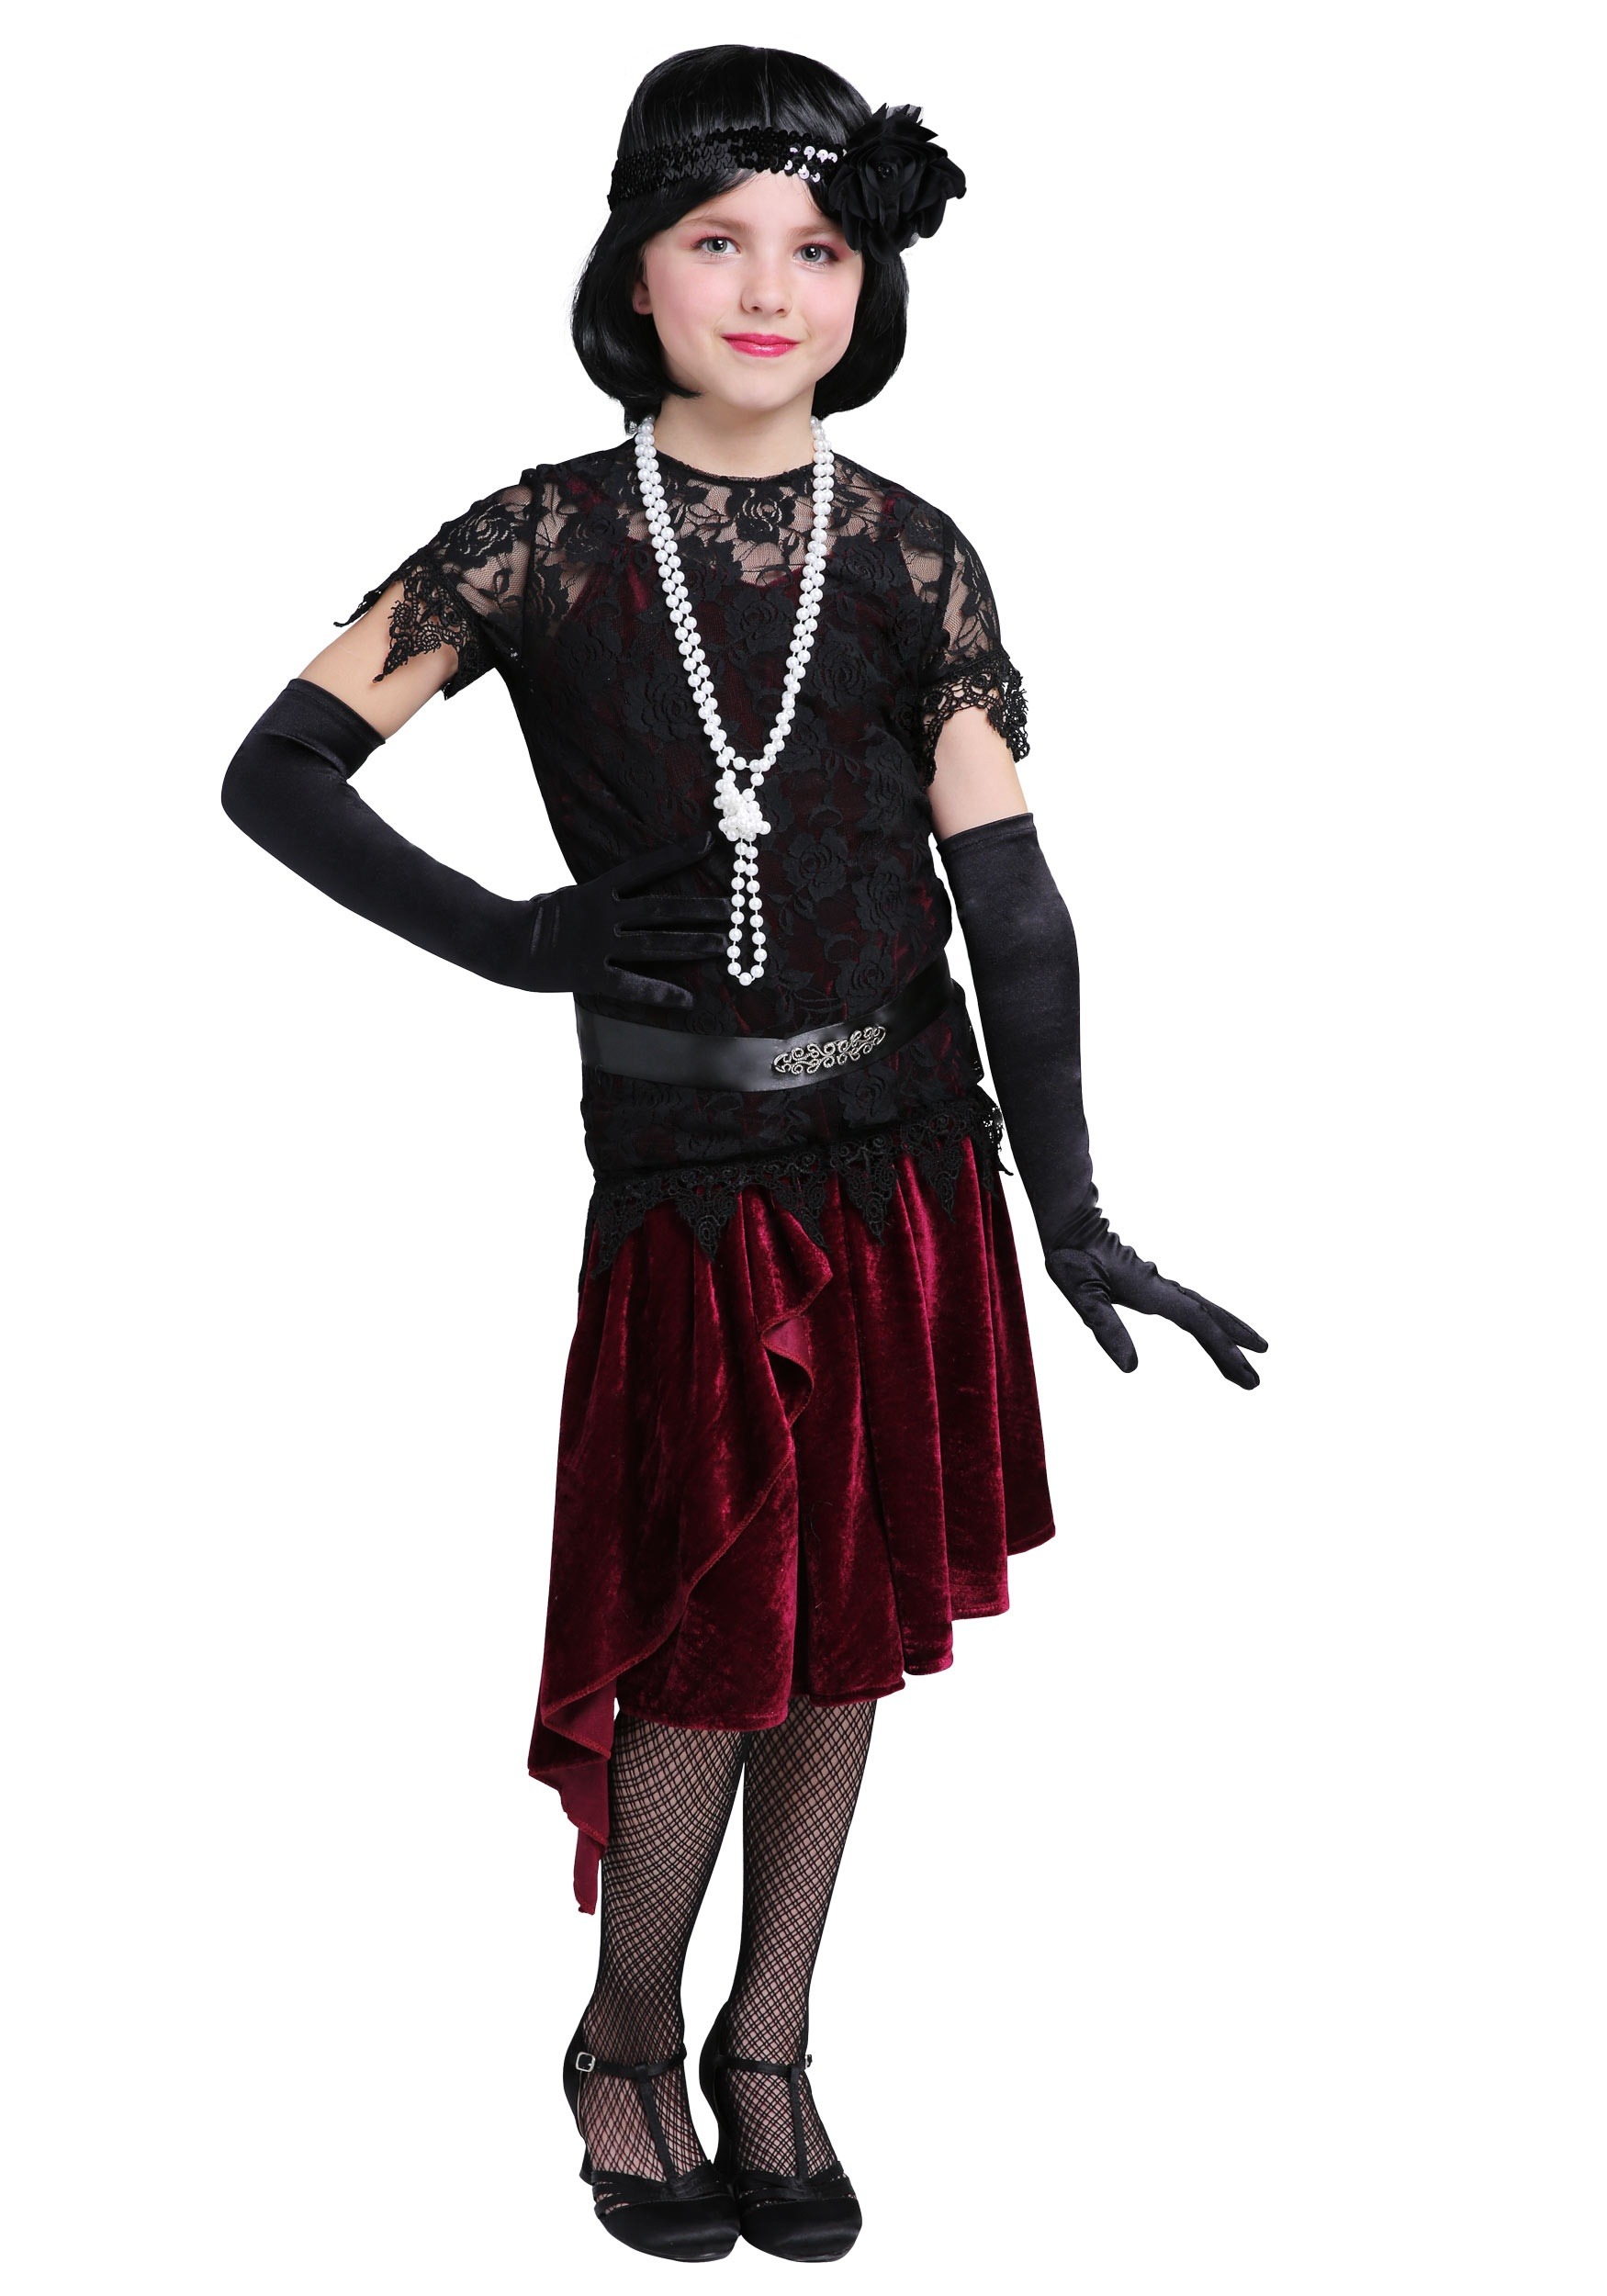 Photos - Fancy Dress FUN Costumes Toe Tappin' Flapper Child Costume Black/Red FUN1619CH